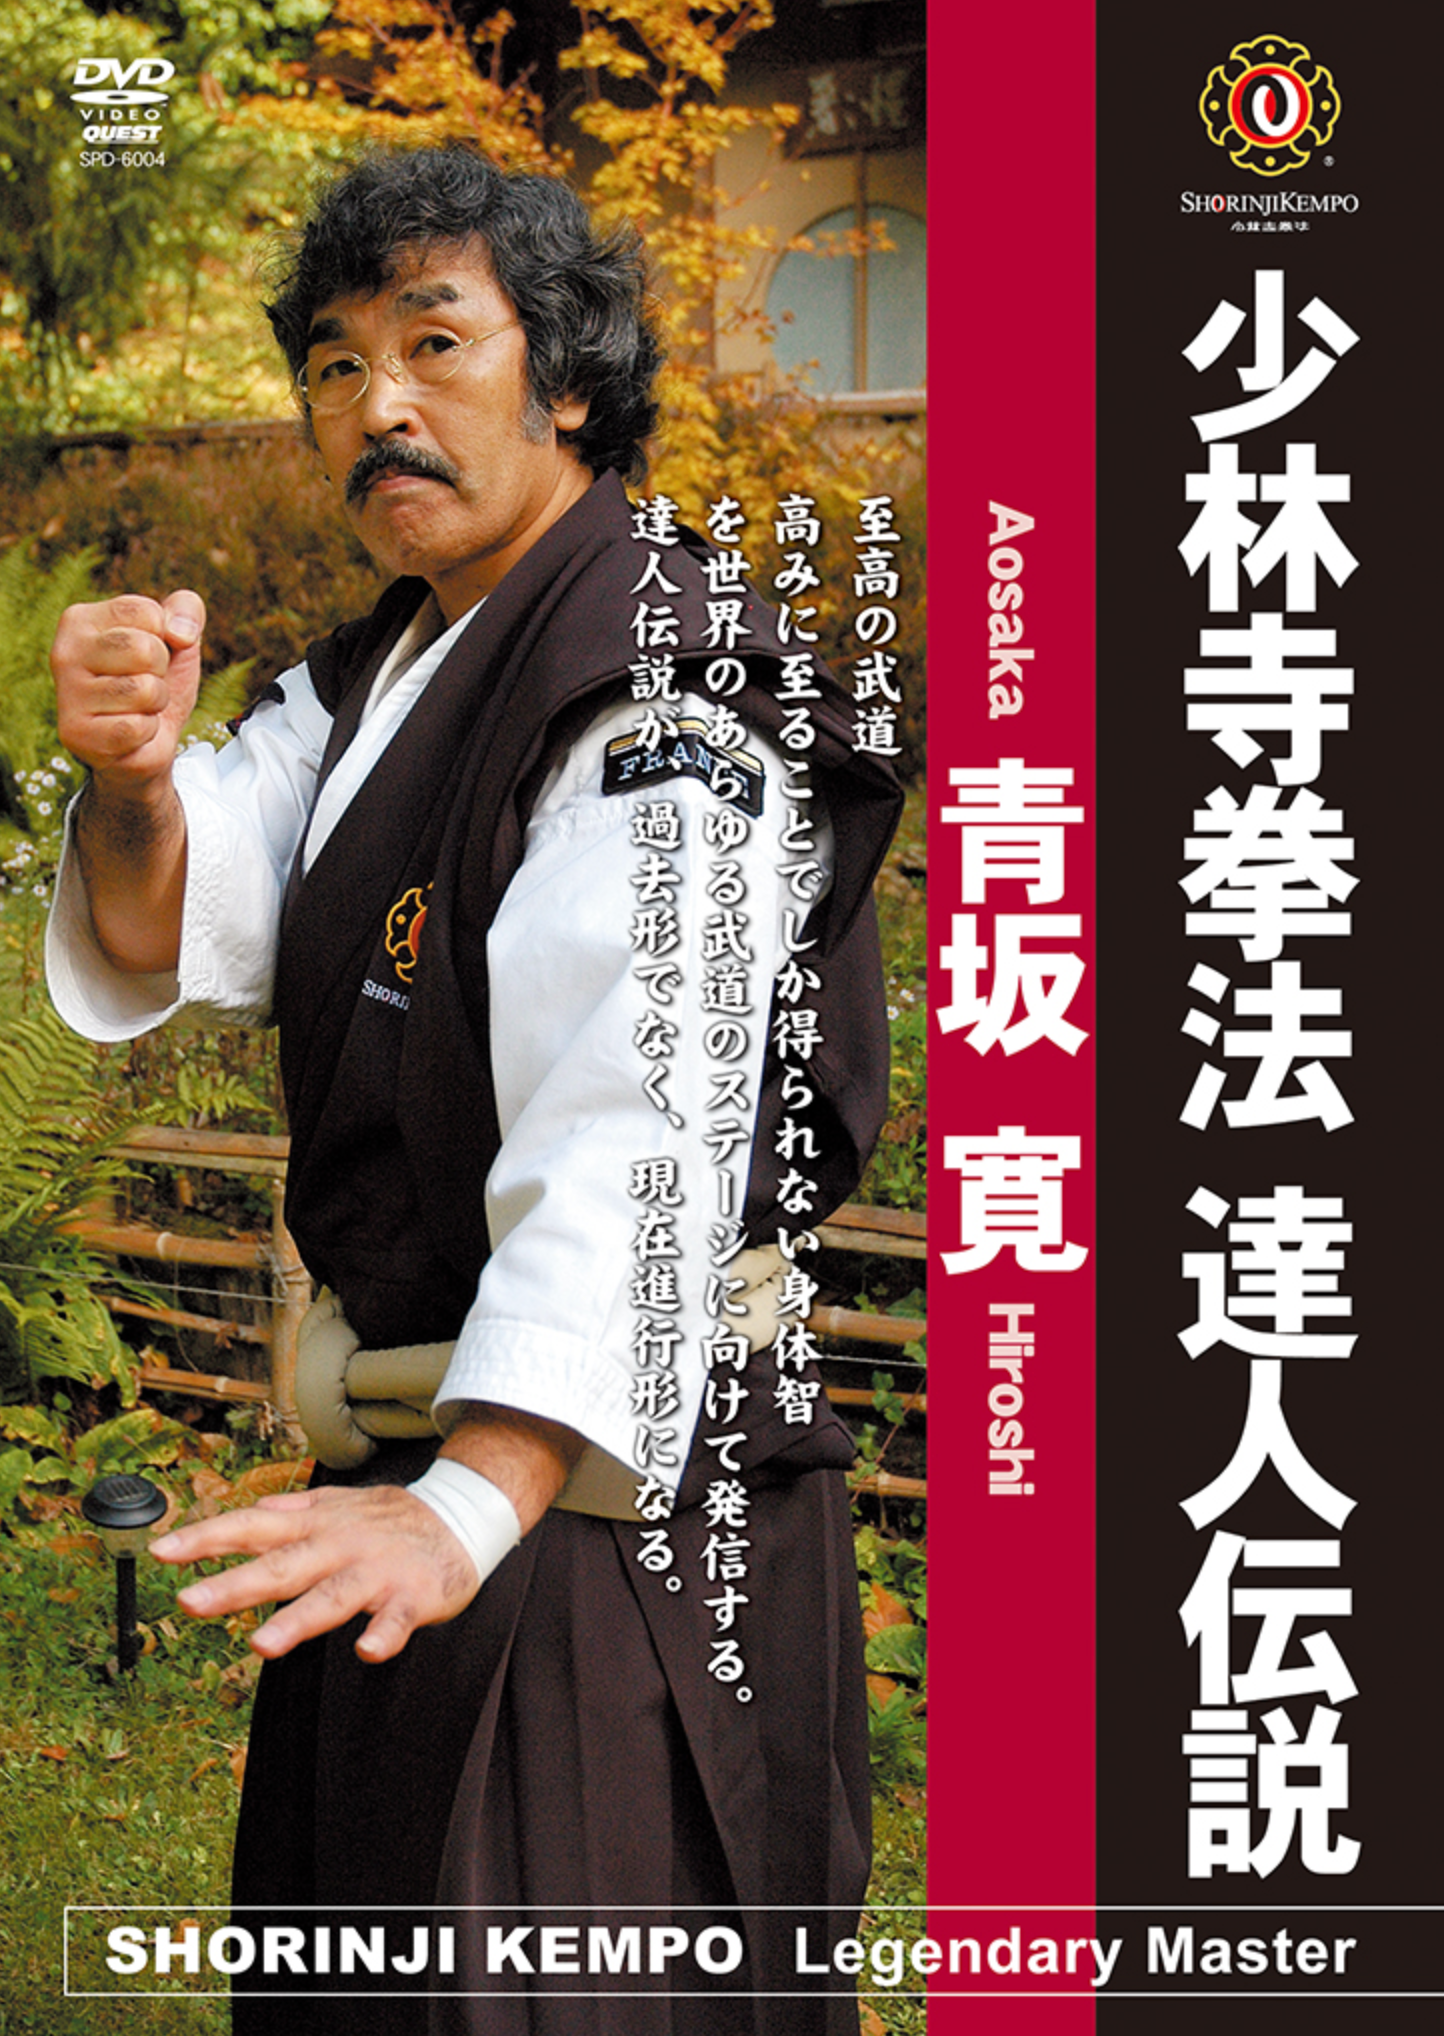 Shorinji Kempo World: Legendary Master Hiroshi Aosaka DVD